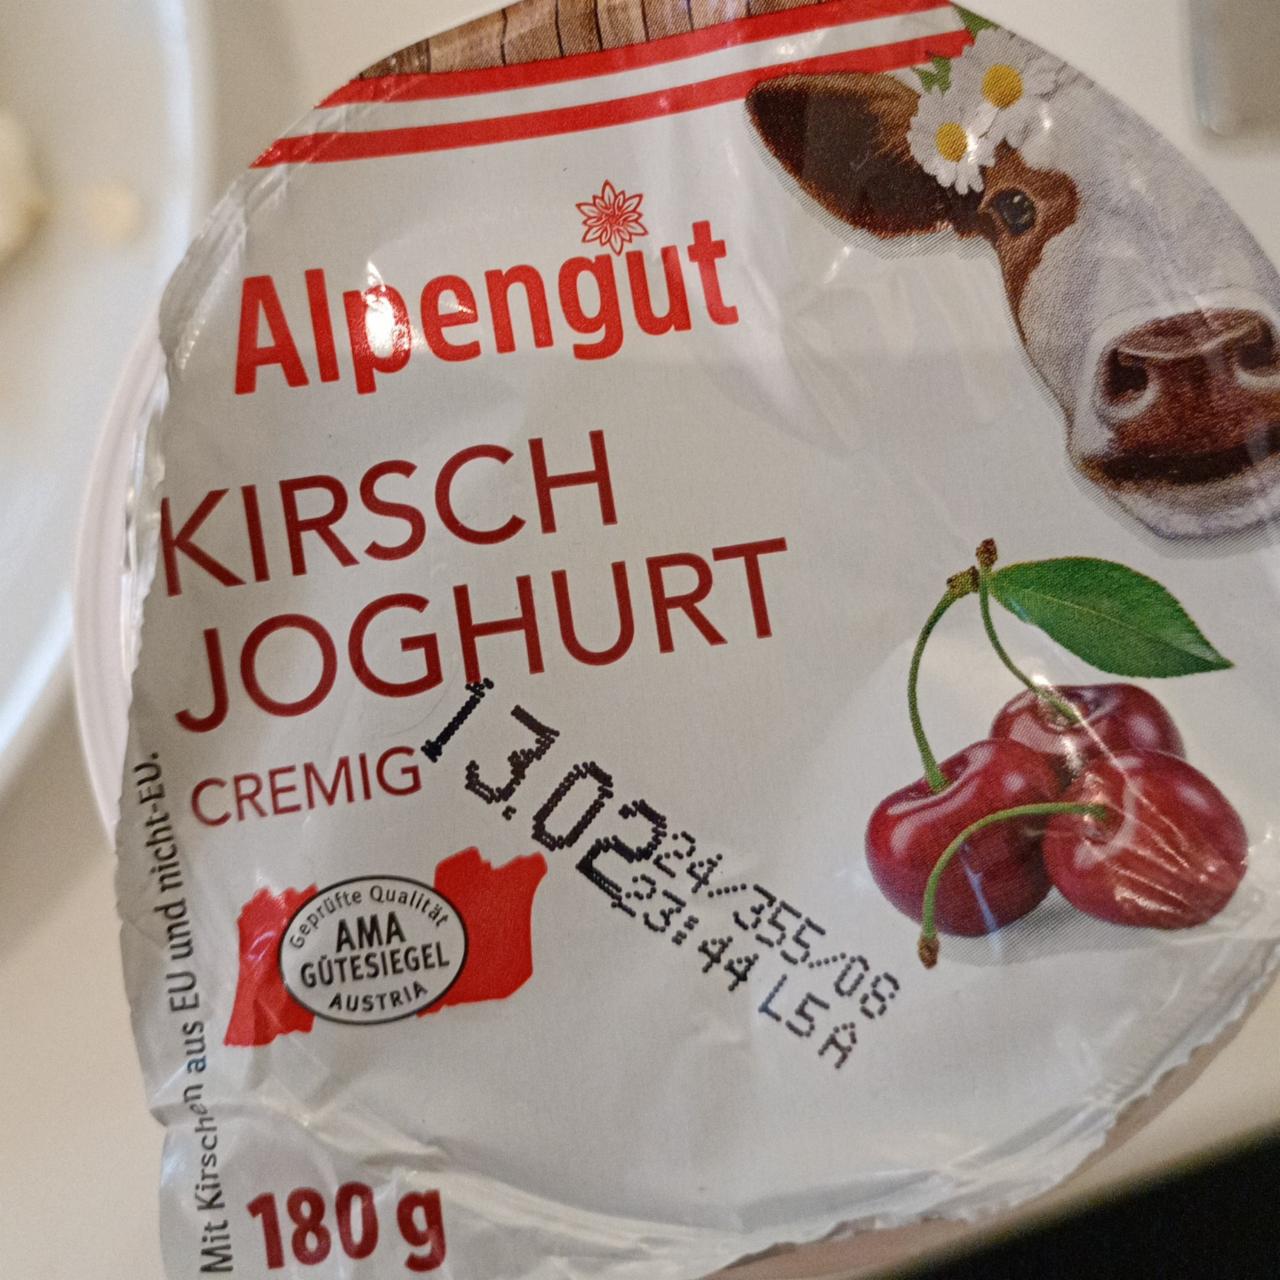 Fotografie - Kirsch Joghurt cremig Alpengut